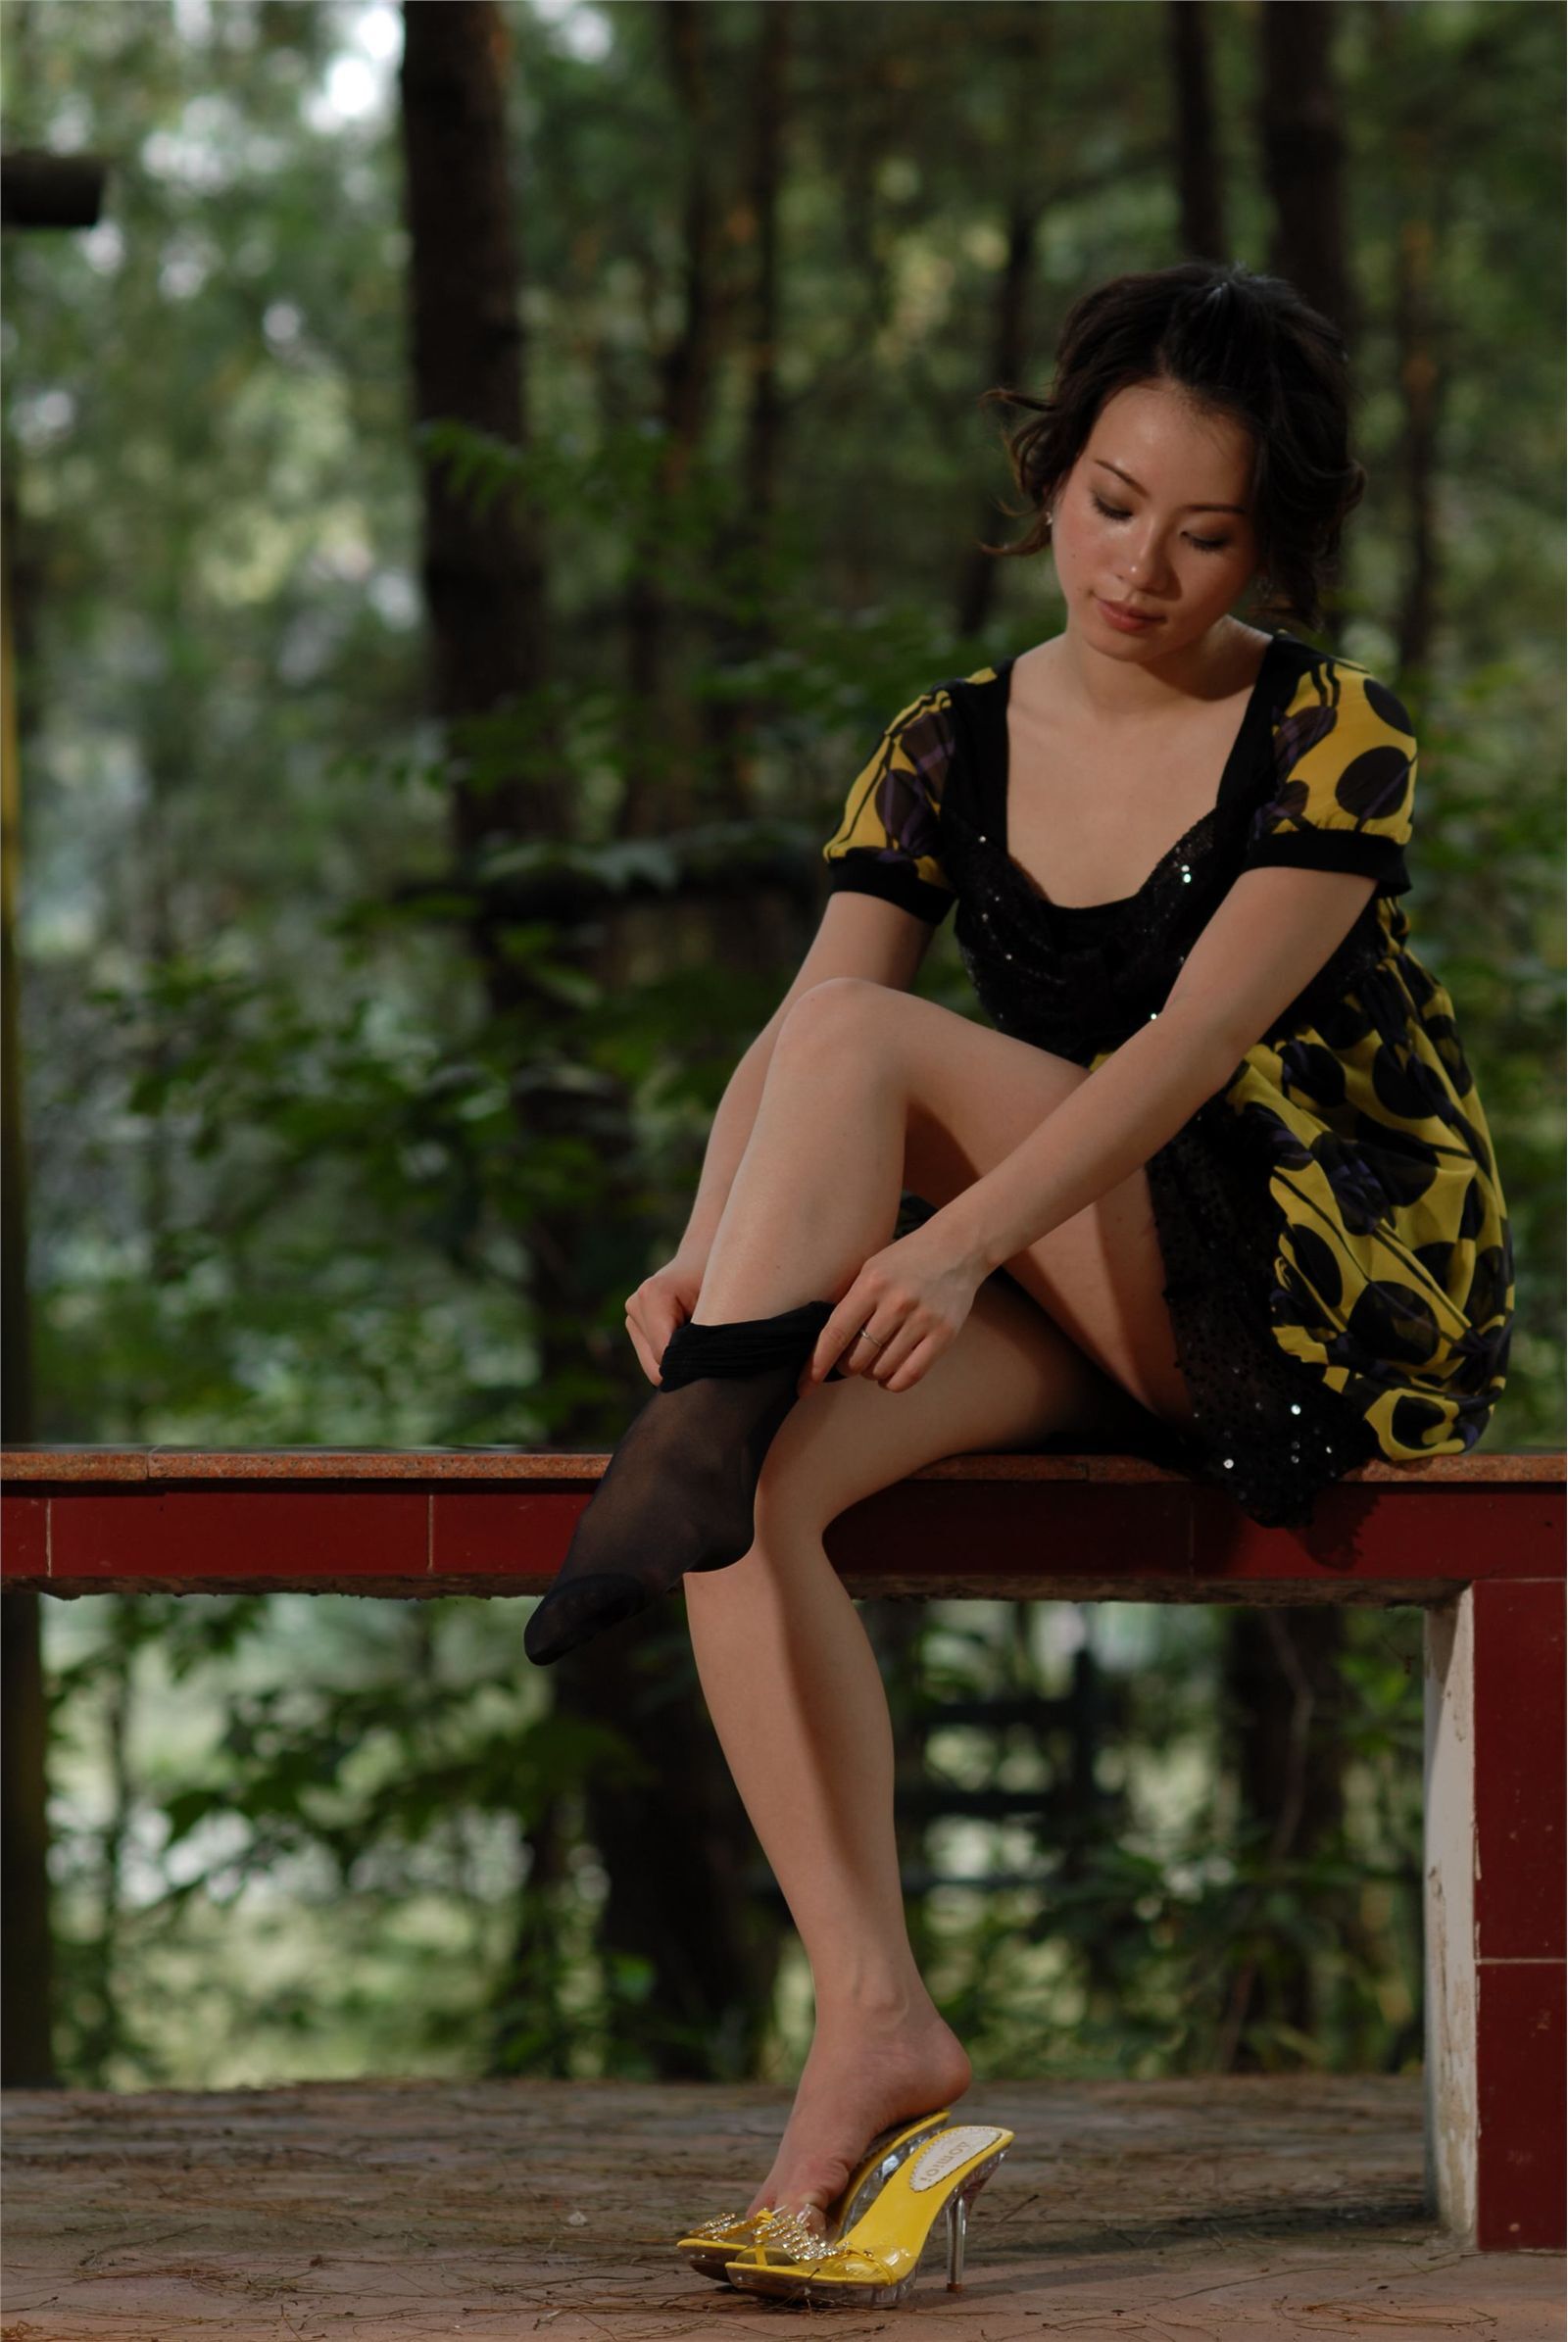 Judy location stockings high heel (no watermark big picture) medium high art set